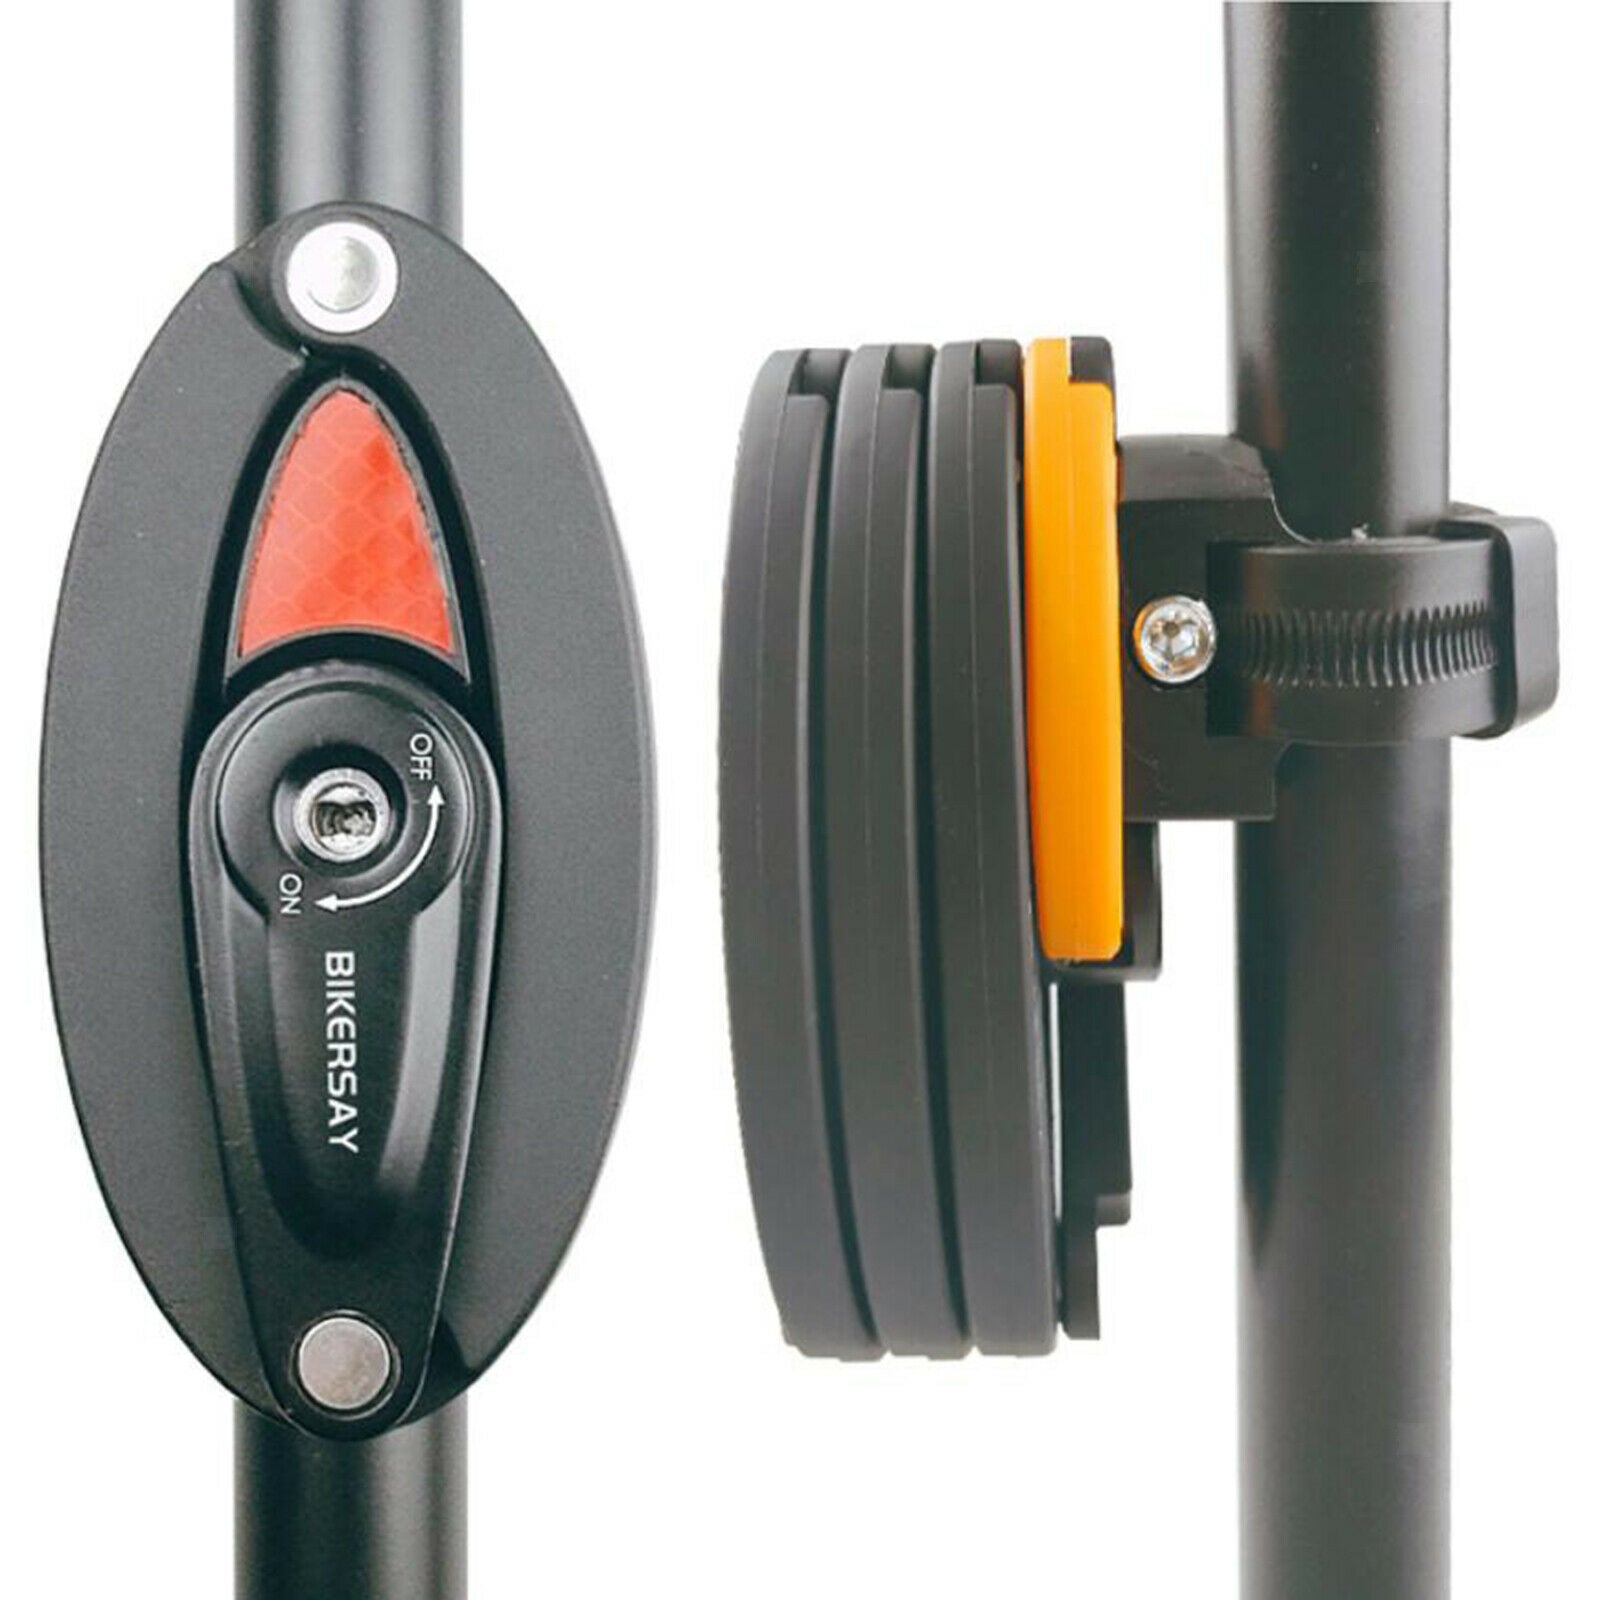 Bike Foldable Lock Motorcycle Heavy Duty Chain Locks with Mounting Bracket